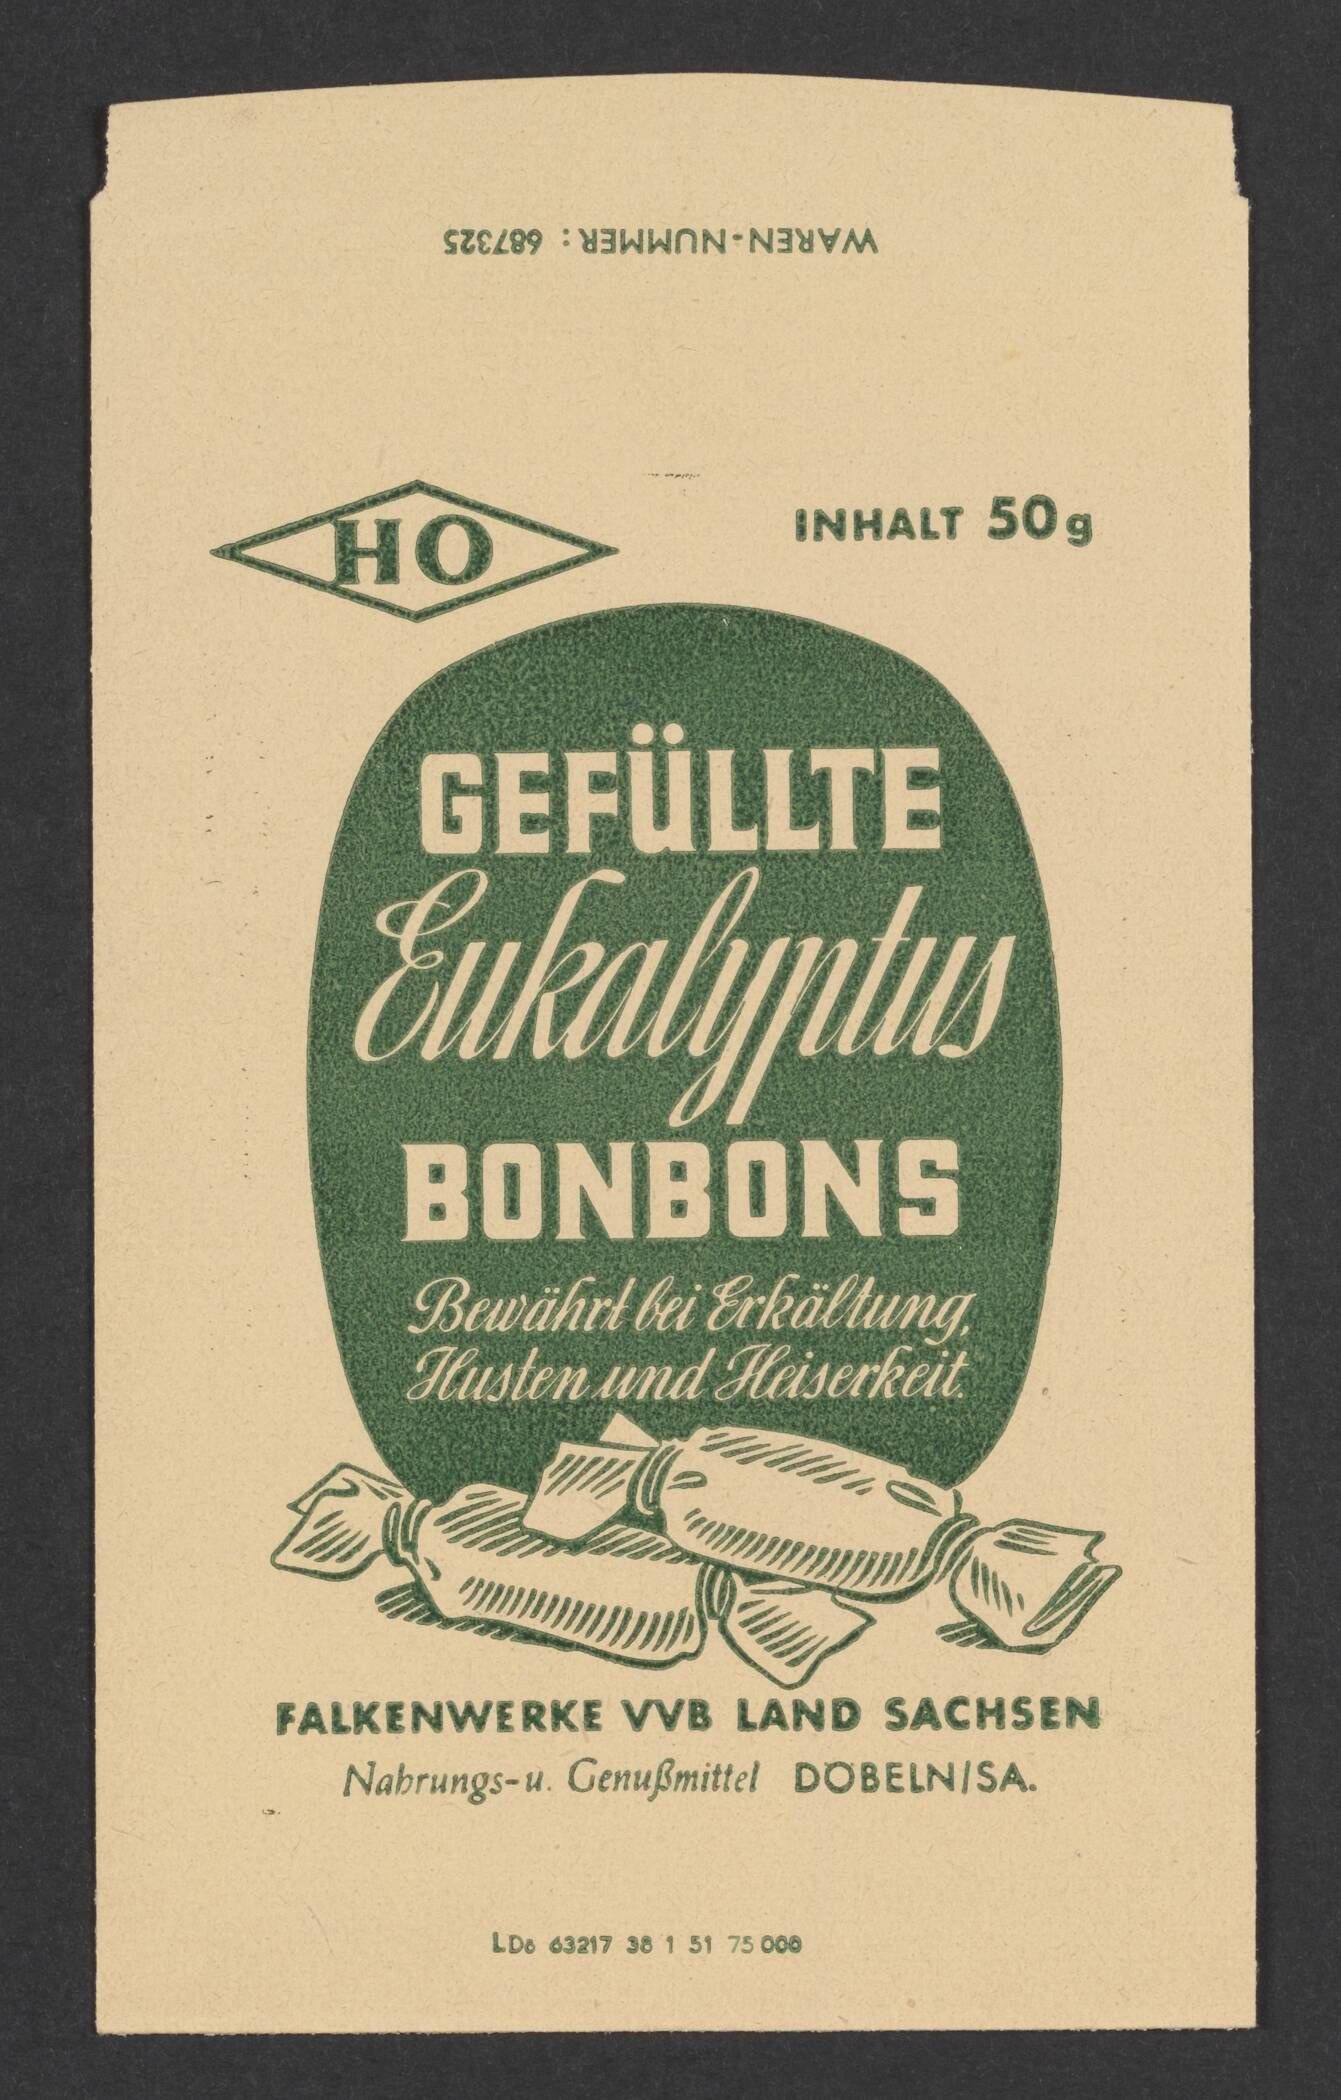 Verpackung für Eukalyptusbonbons (Stadtmuseum / Kleine Galerie Döbeln CC BY-NC-SA)